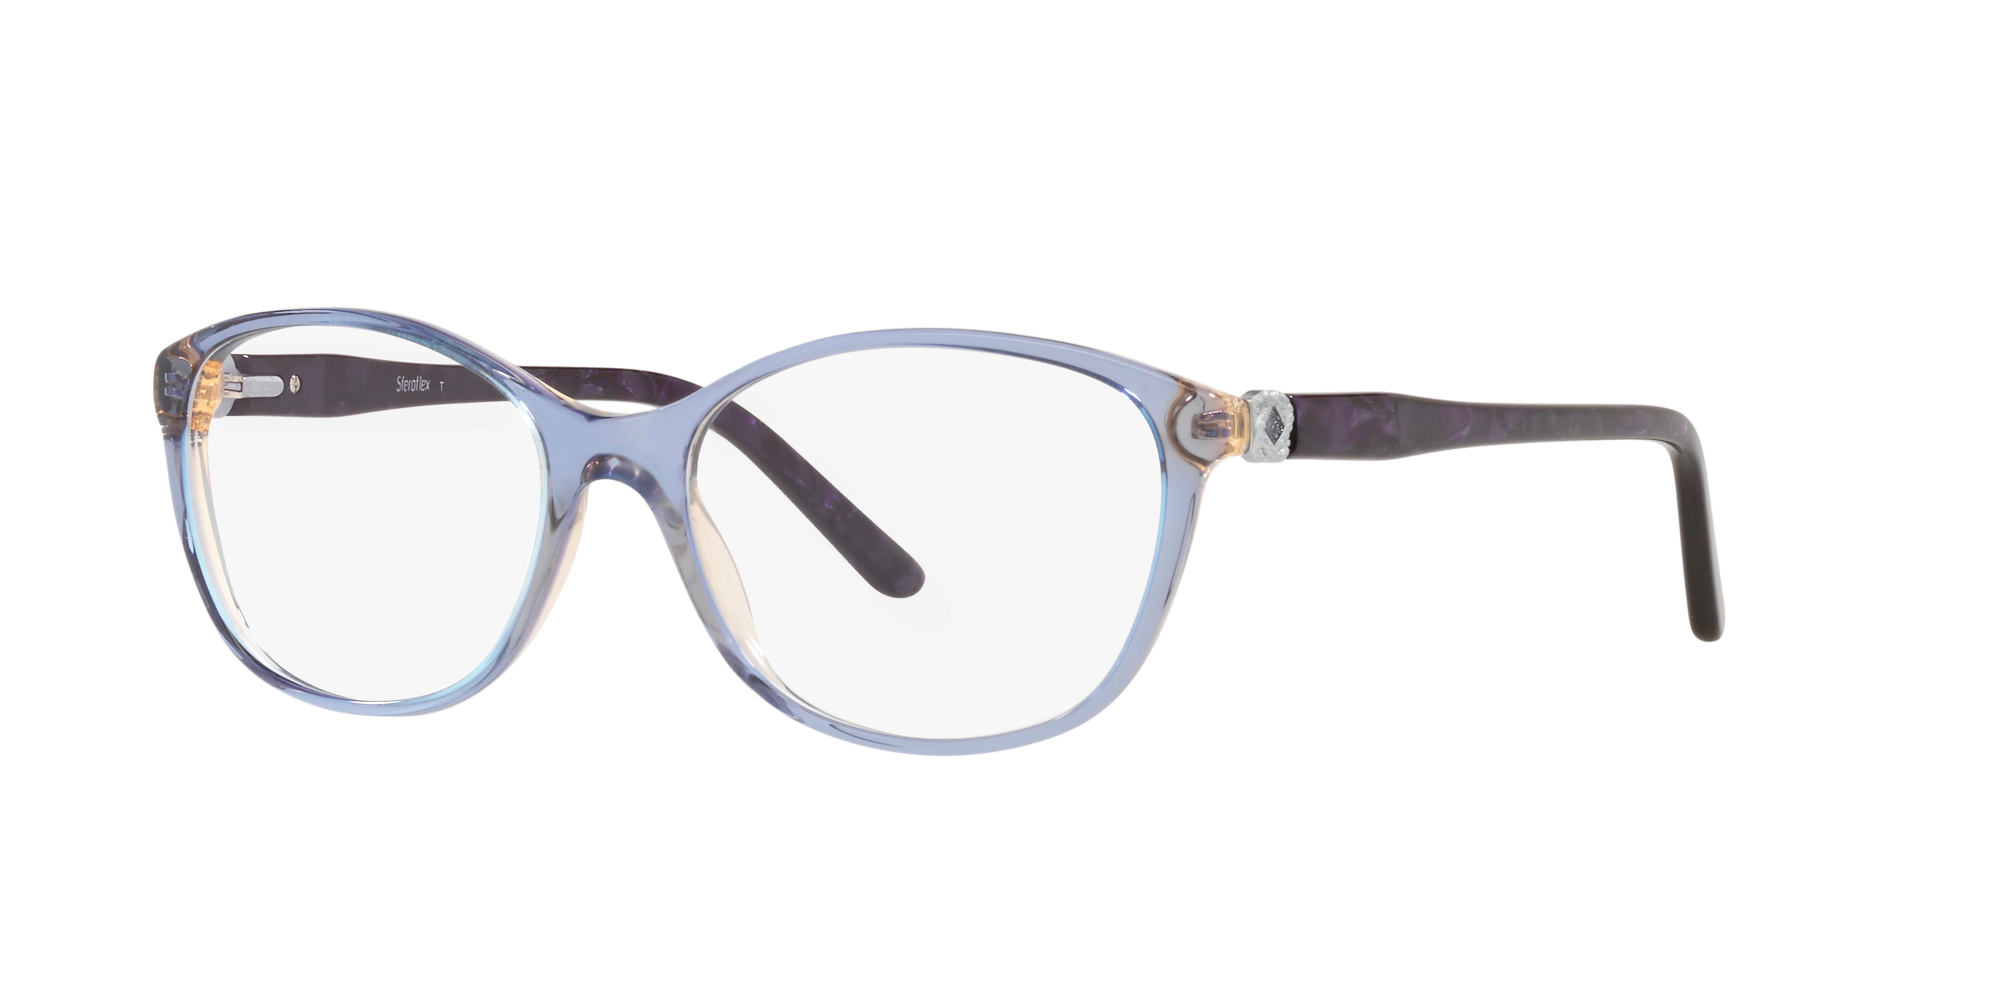 Angle_Left01 Sferoflex SF 1548 (C352) Glasses Transparent / Purple